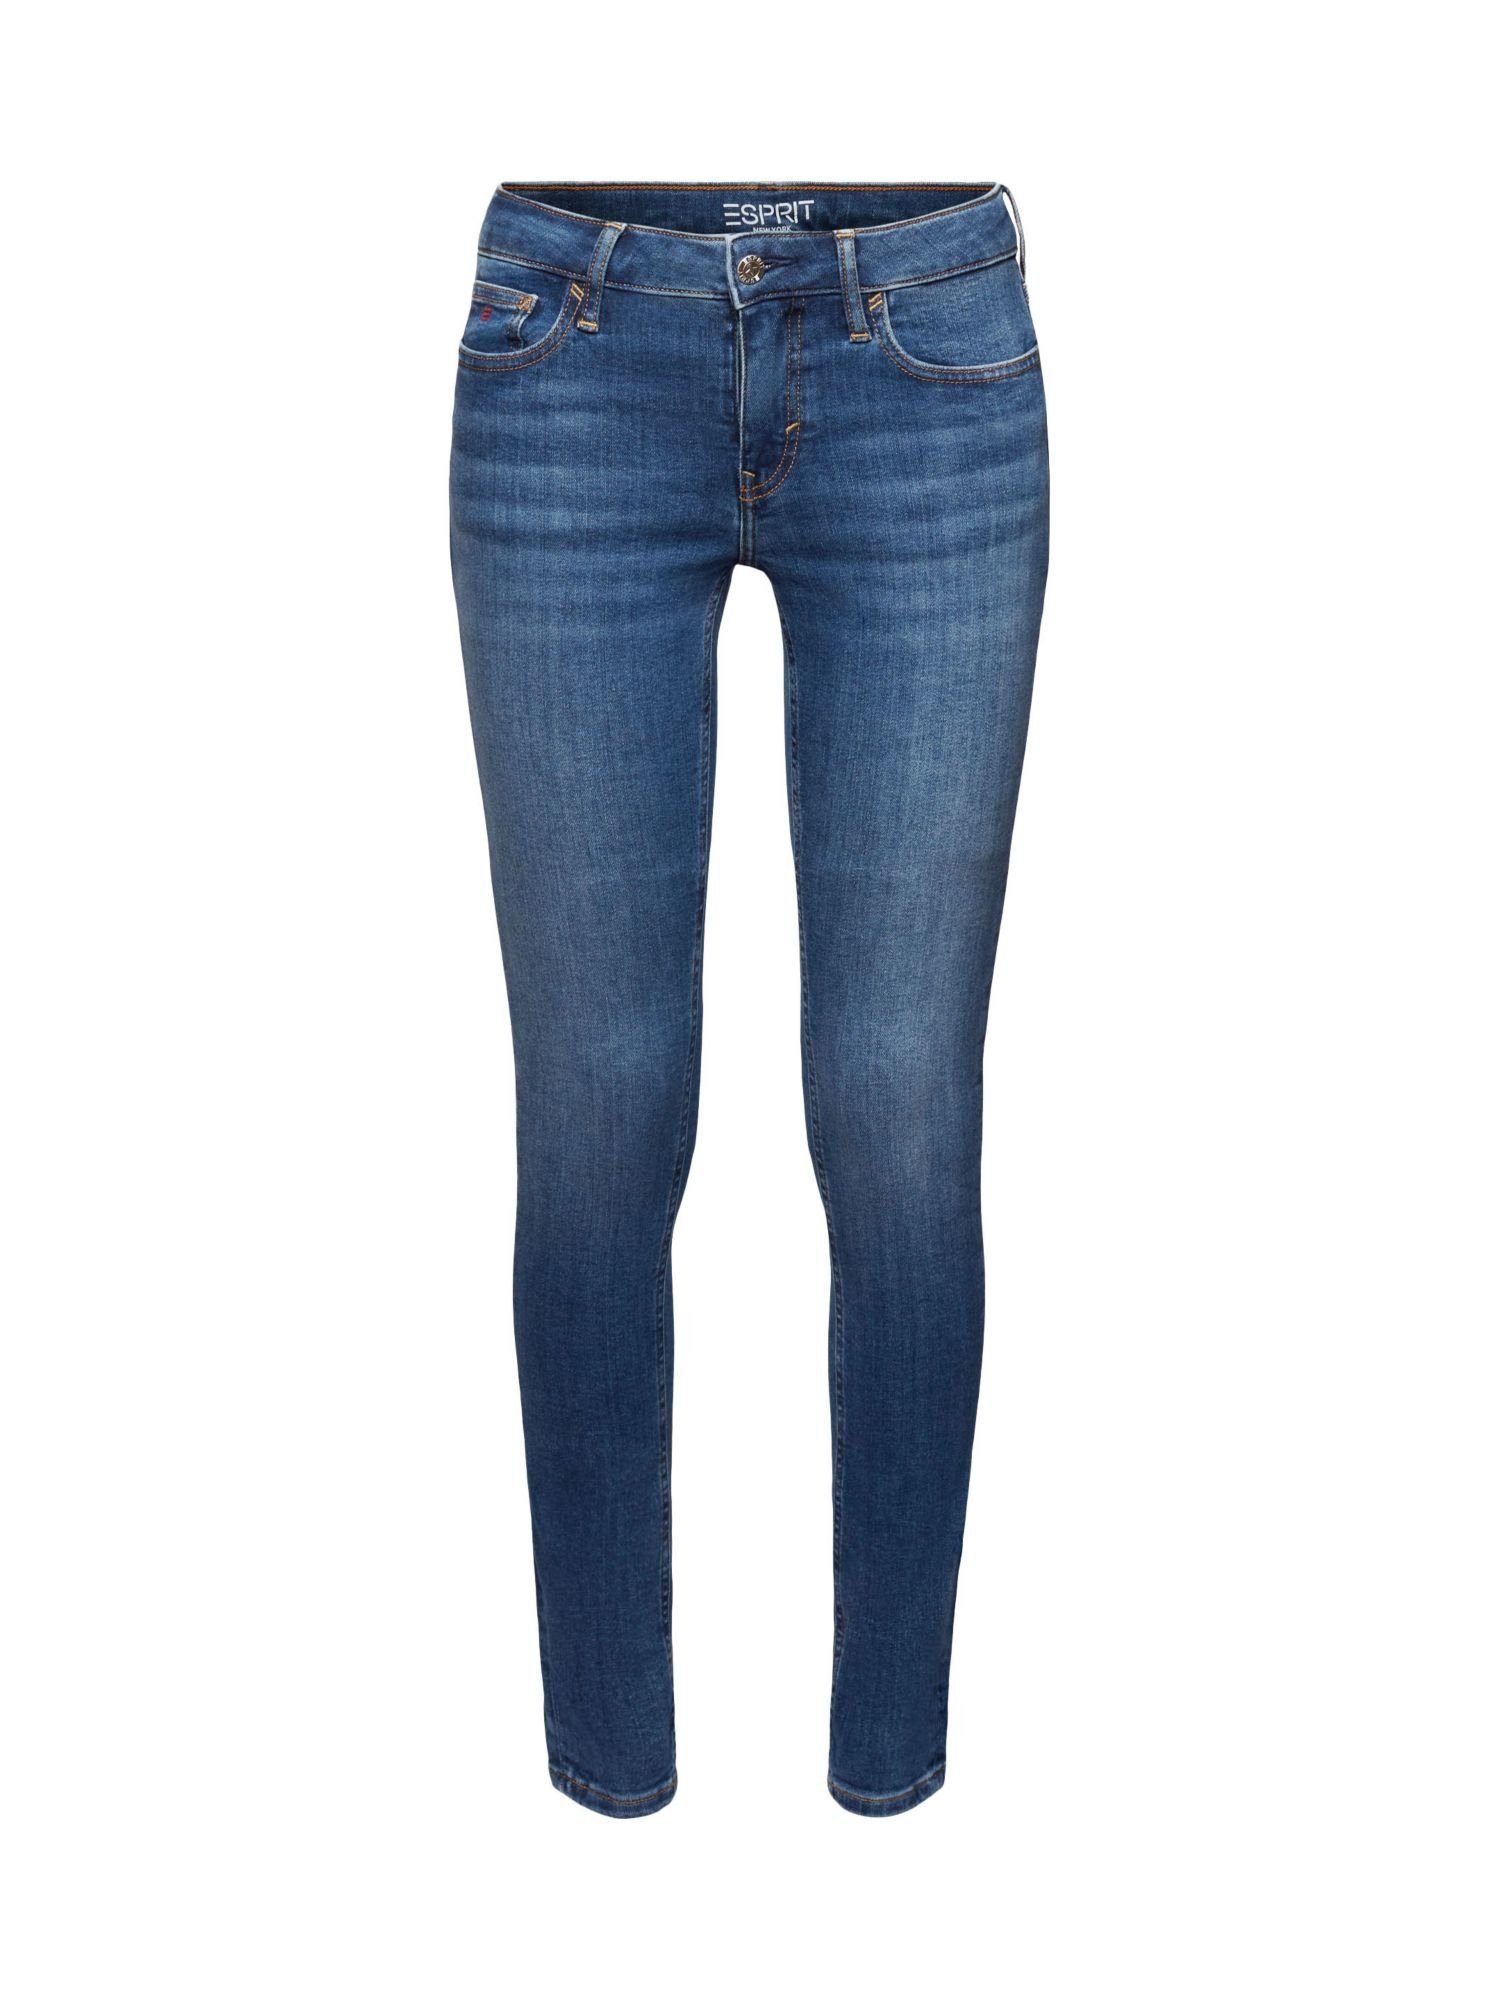 Esprit Skinny-fit-Jeans Hochwertige Skinny Jeans mit mittelhohem Bund